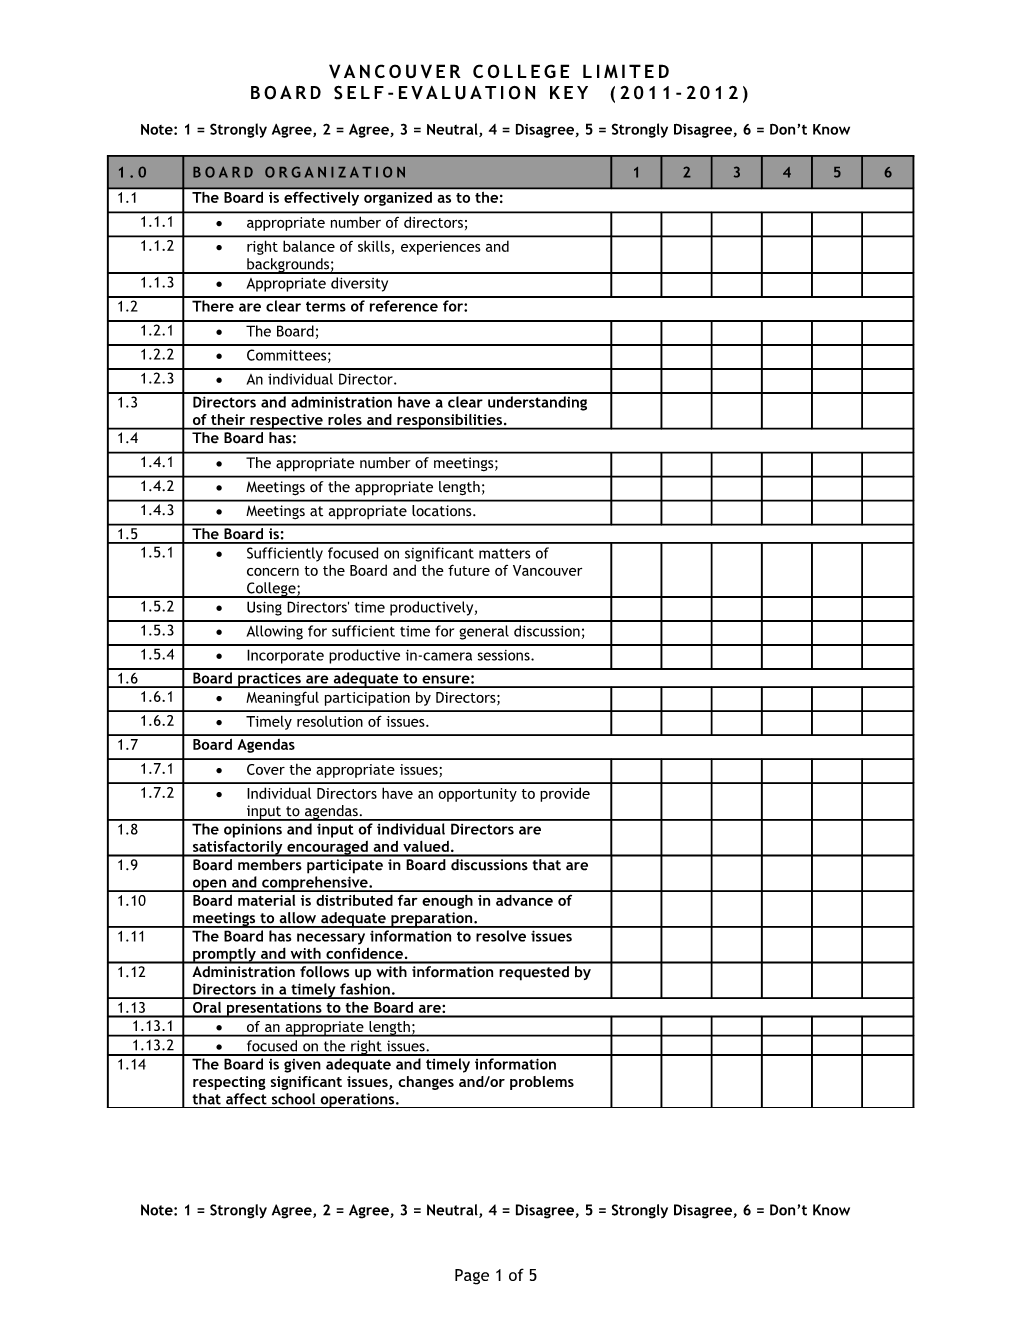 Board Self-Evaluation Key (2011-2012)